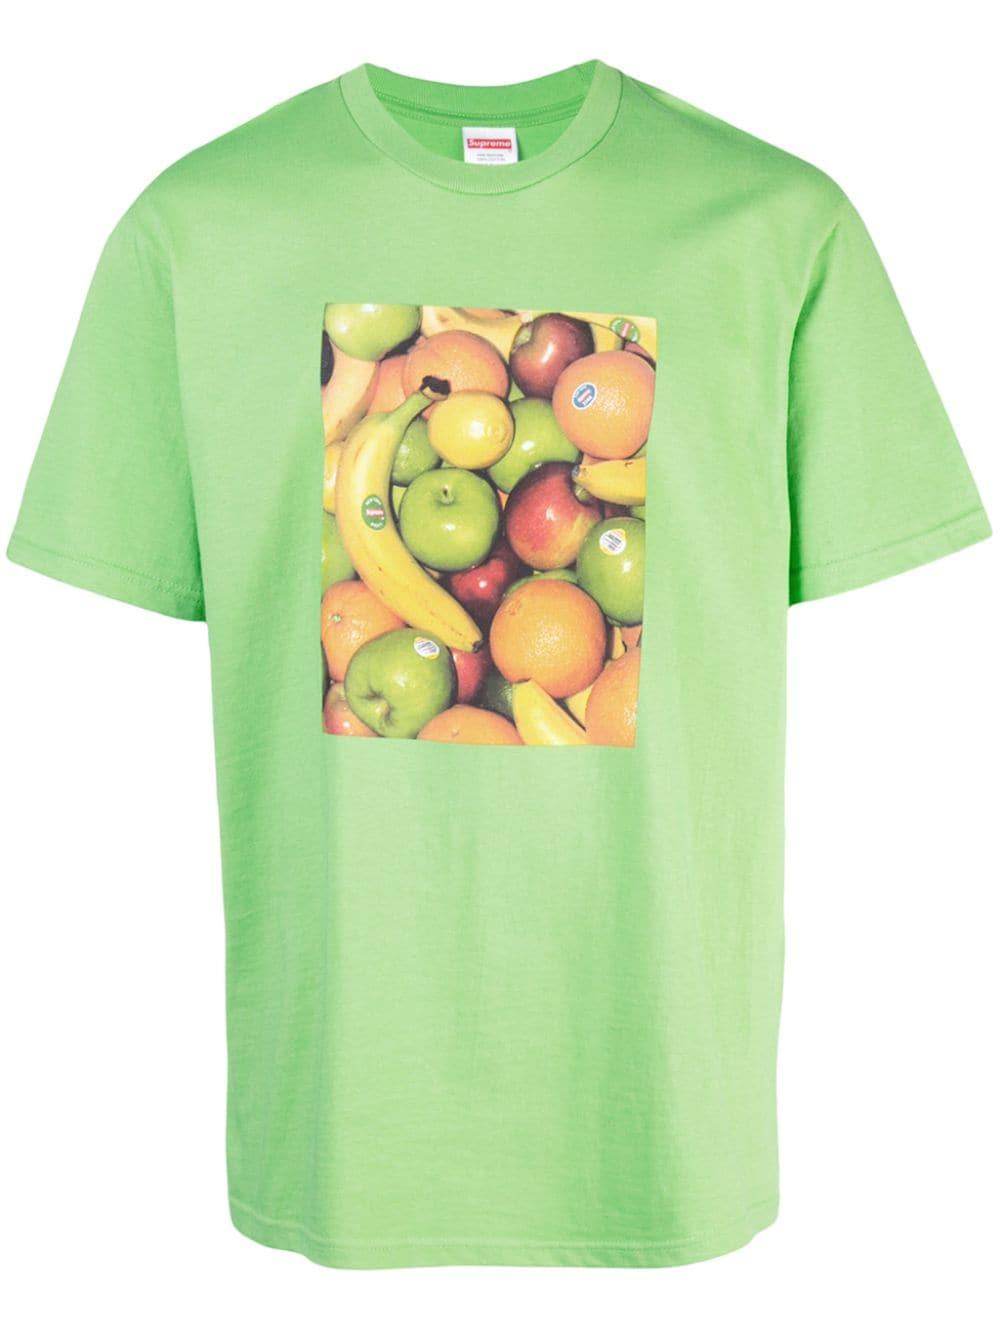 Supreme Fruit Print T-shirt in Green for Men - Lyst